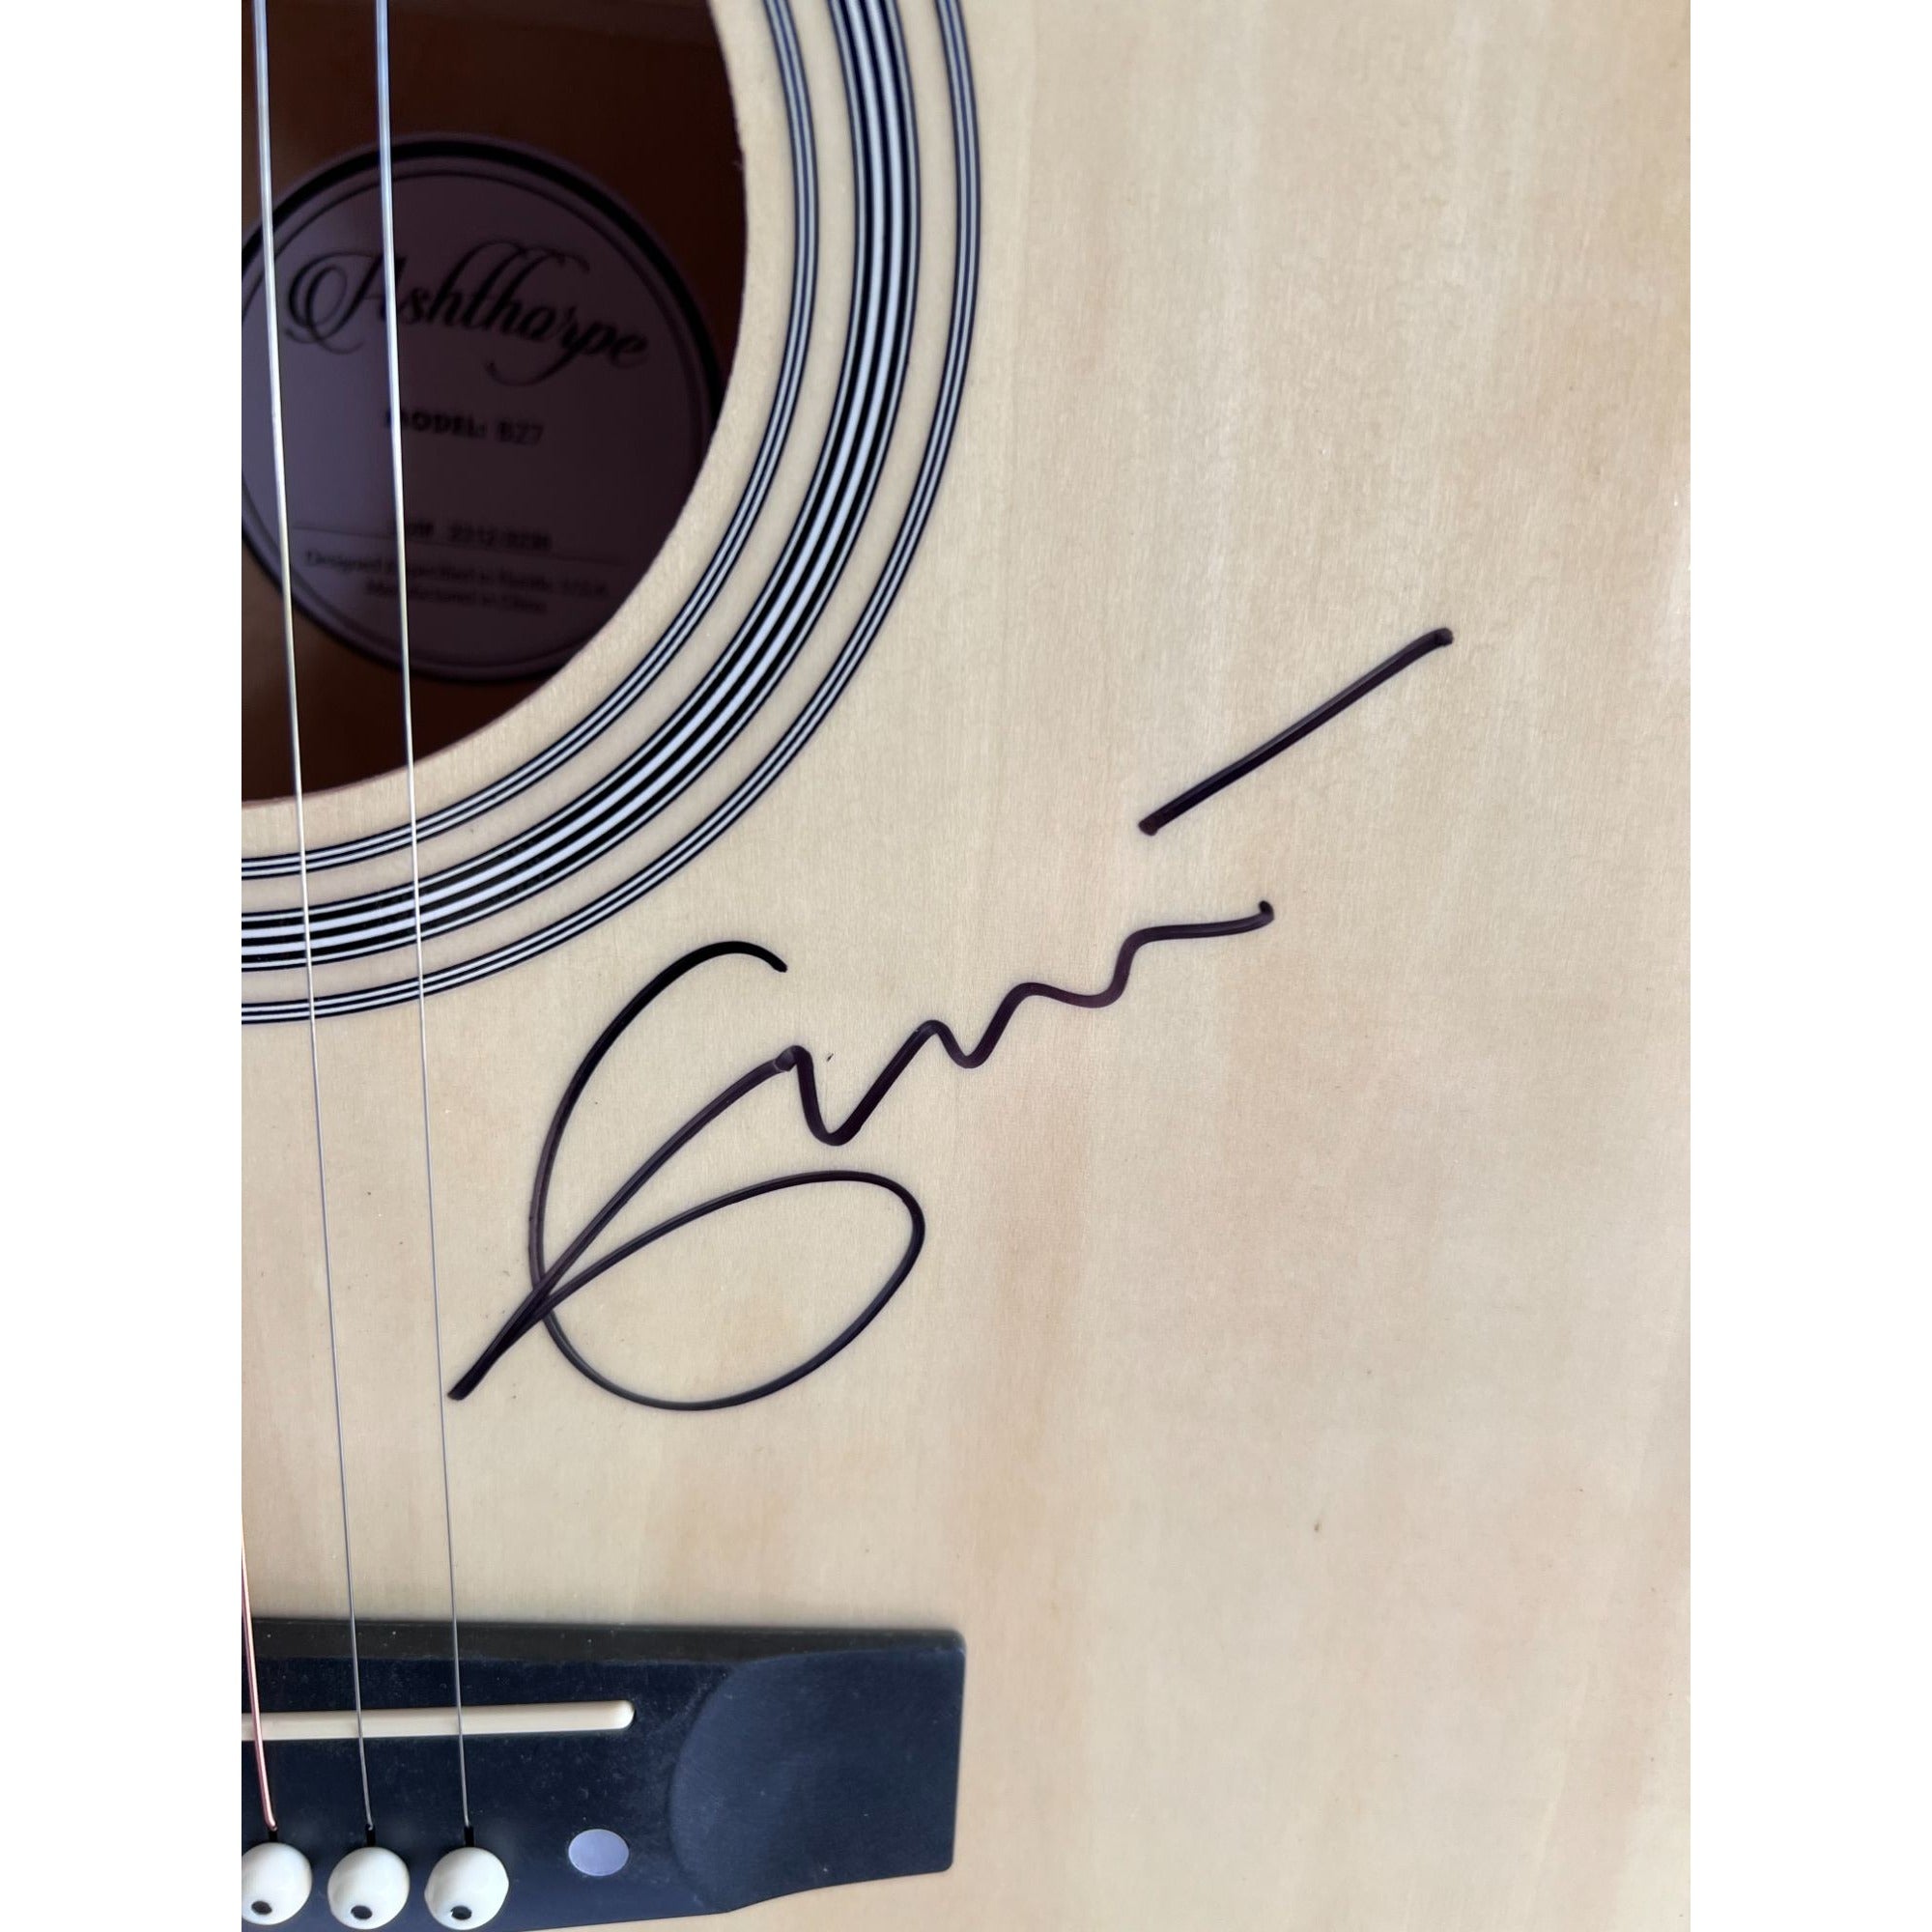 Eric Clapton Jack Bruce Ginger Baker "Cream" full size Ashharpe acoustic guitar signed with proof